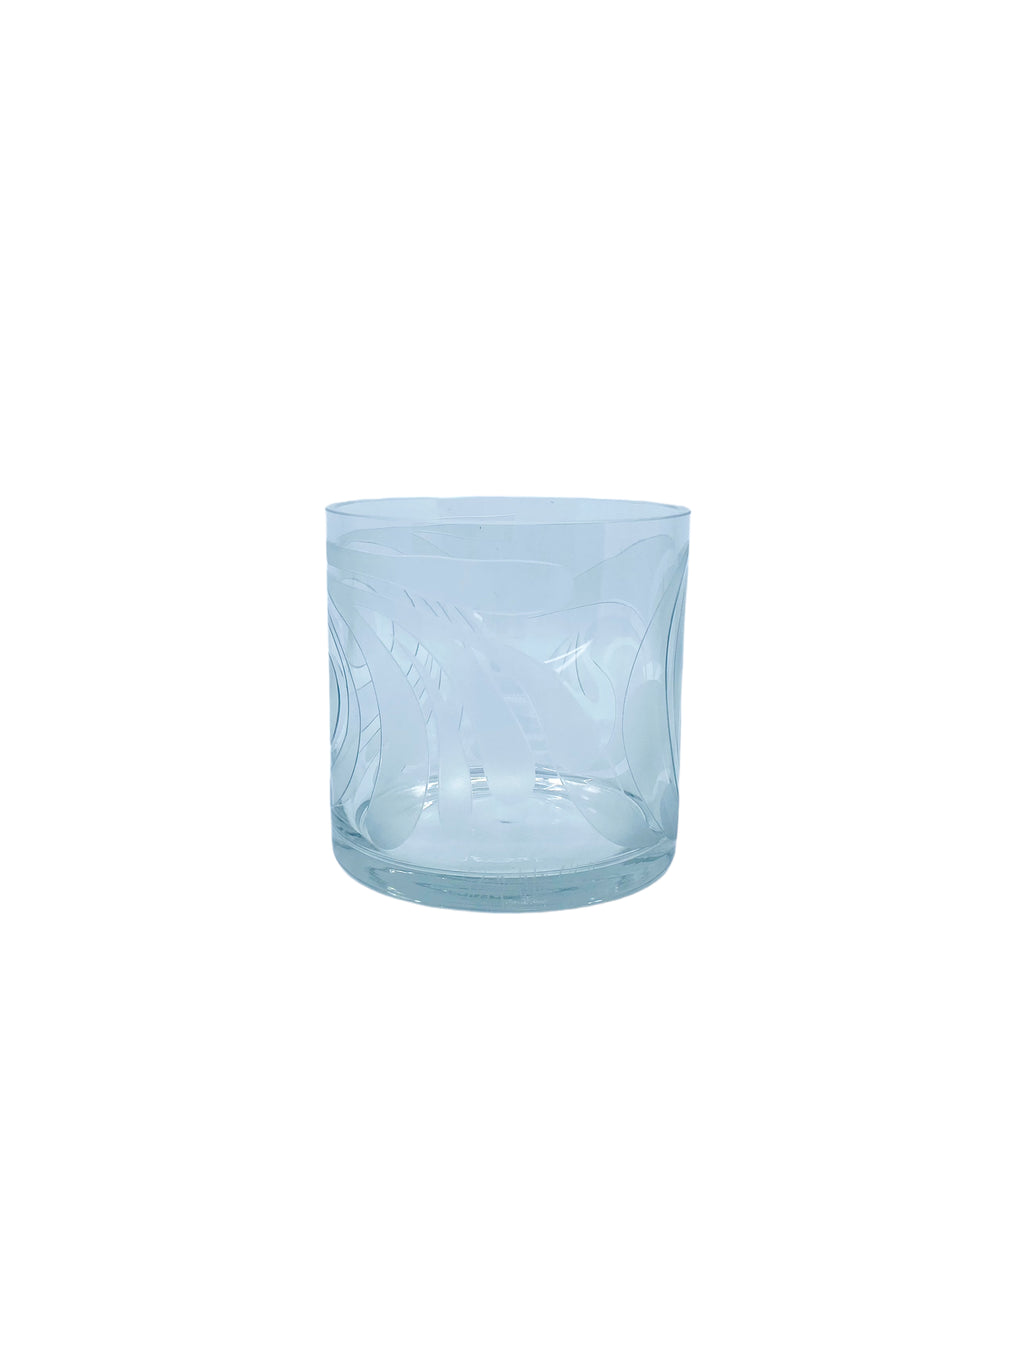 Bjørn Wiinblad for Rosenthal Studio Line Crystal Ice Bucket / Vase